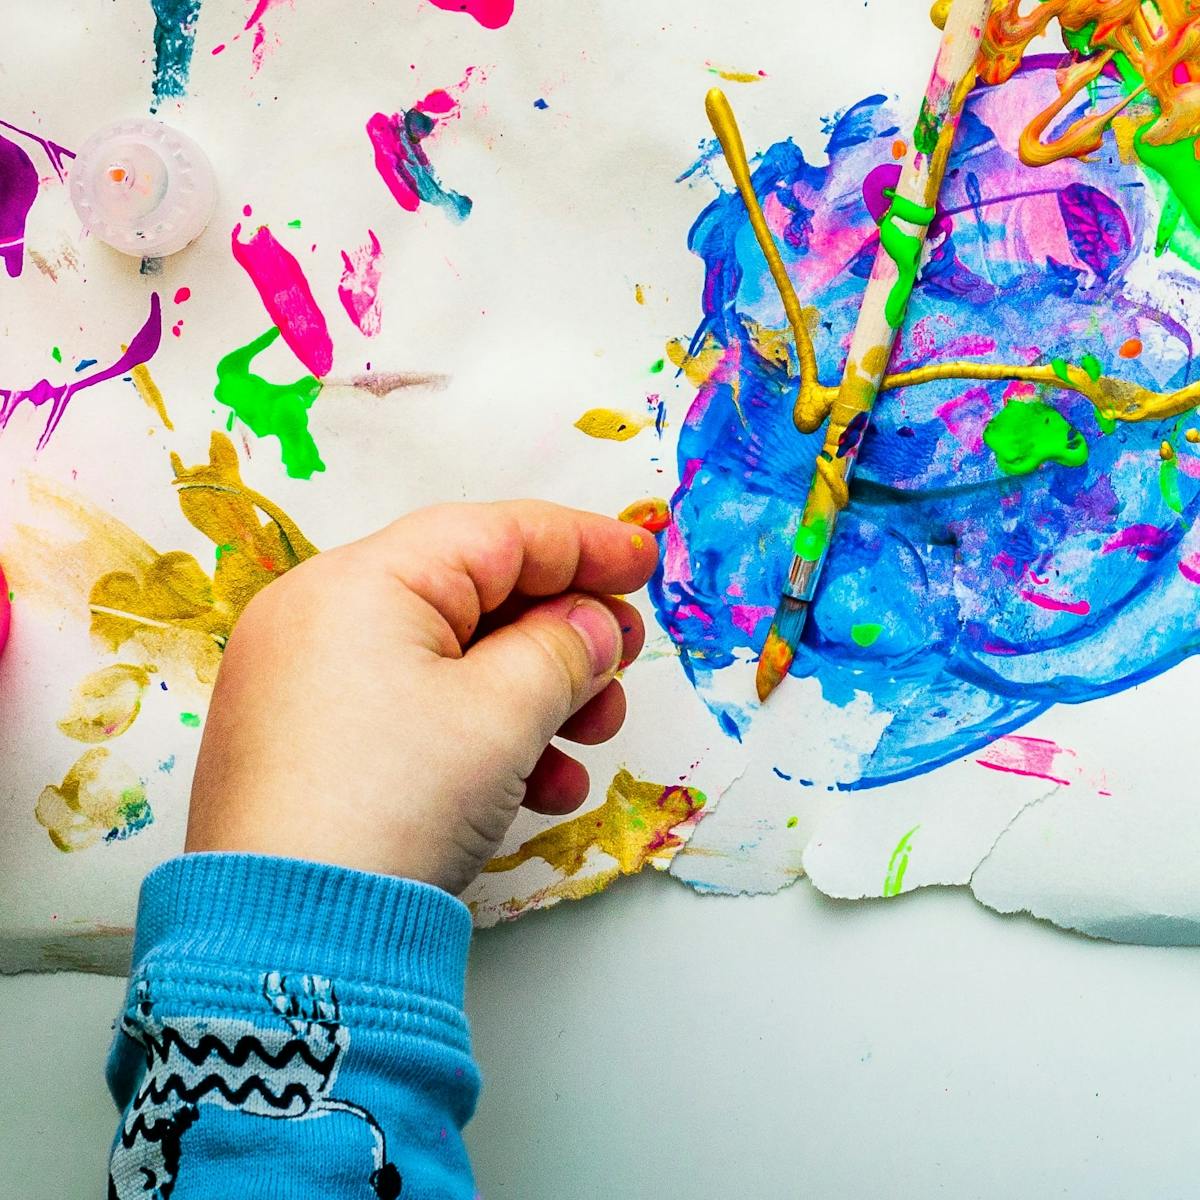 6 Ways To Help Kids Express Their Feelings About The Coronavirus Pandemic Through Art